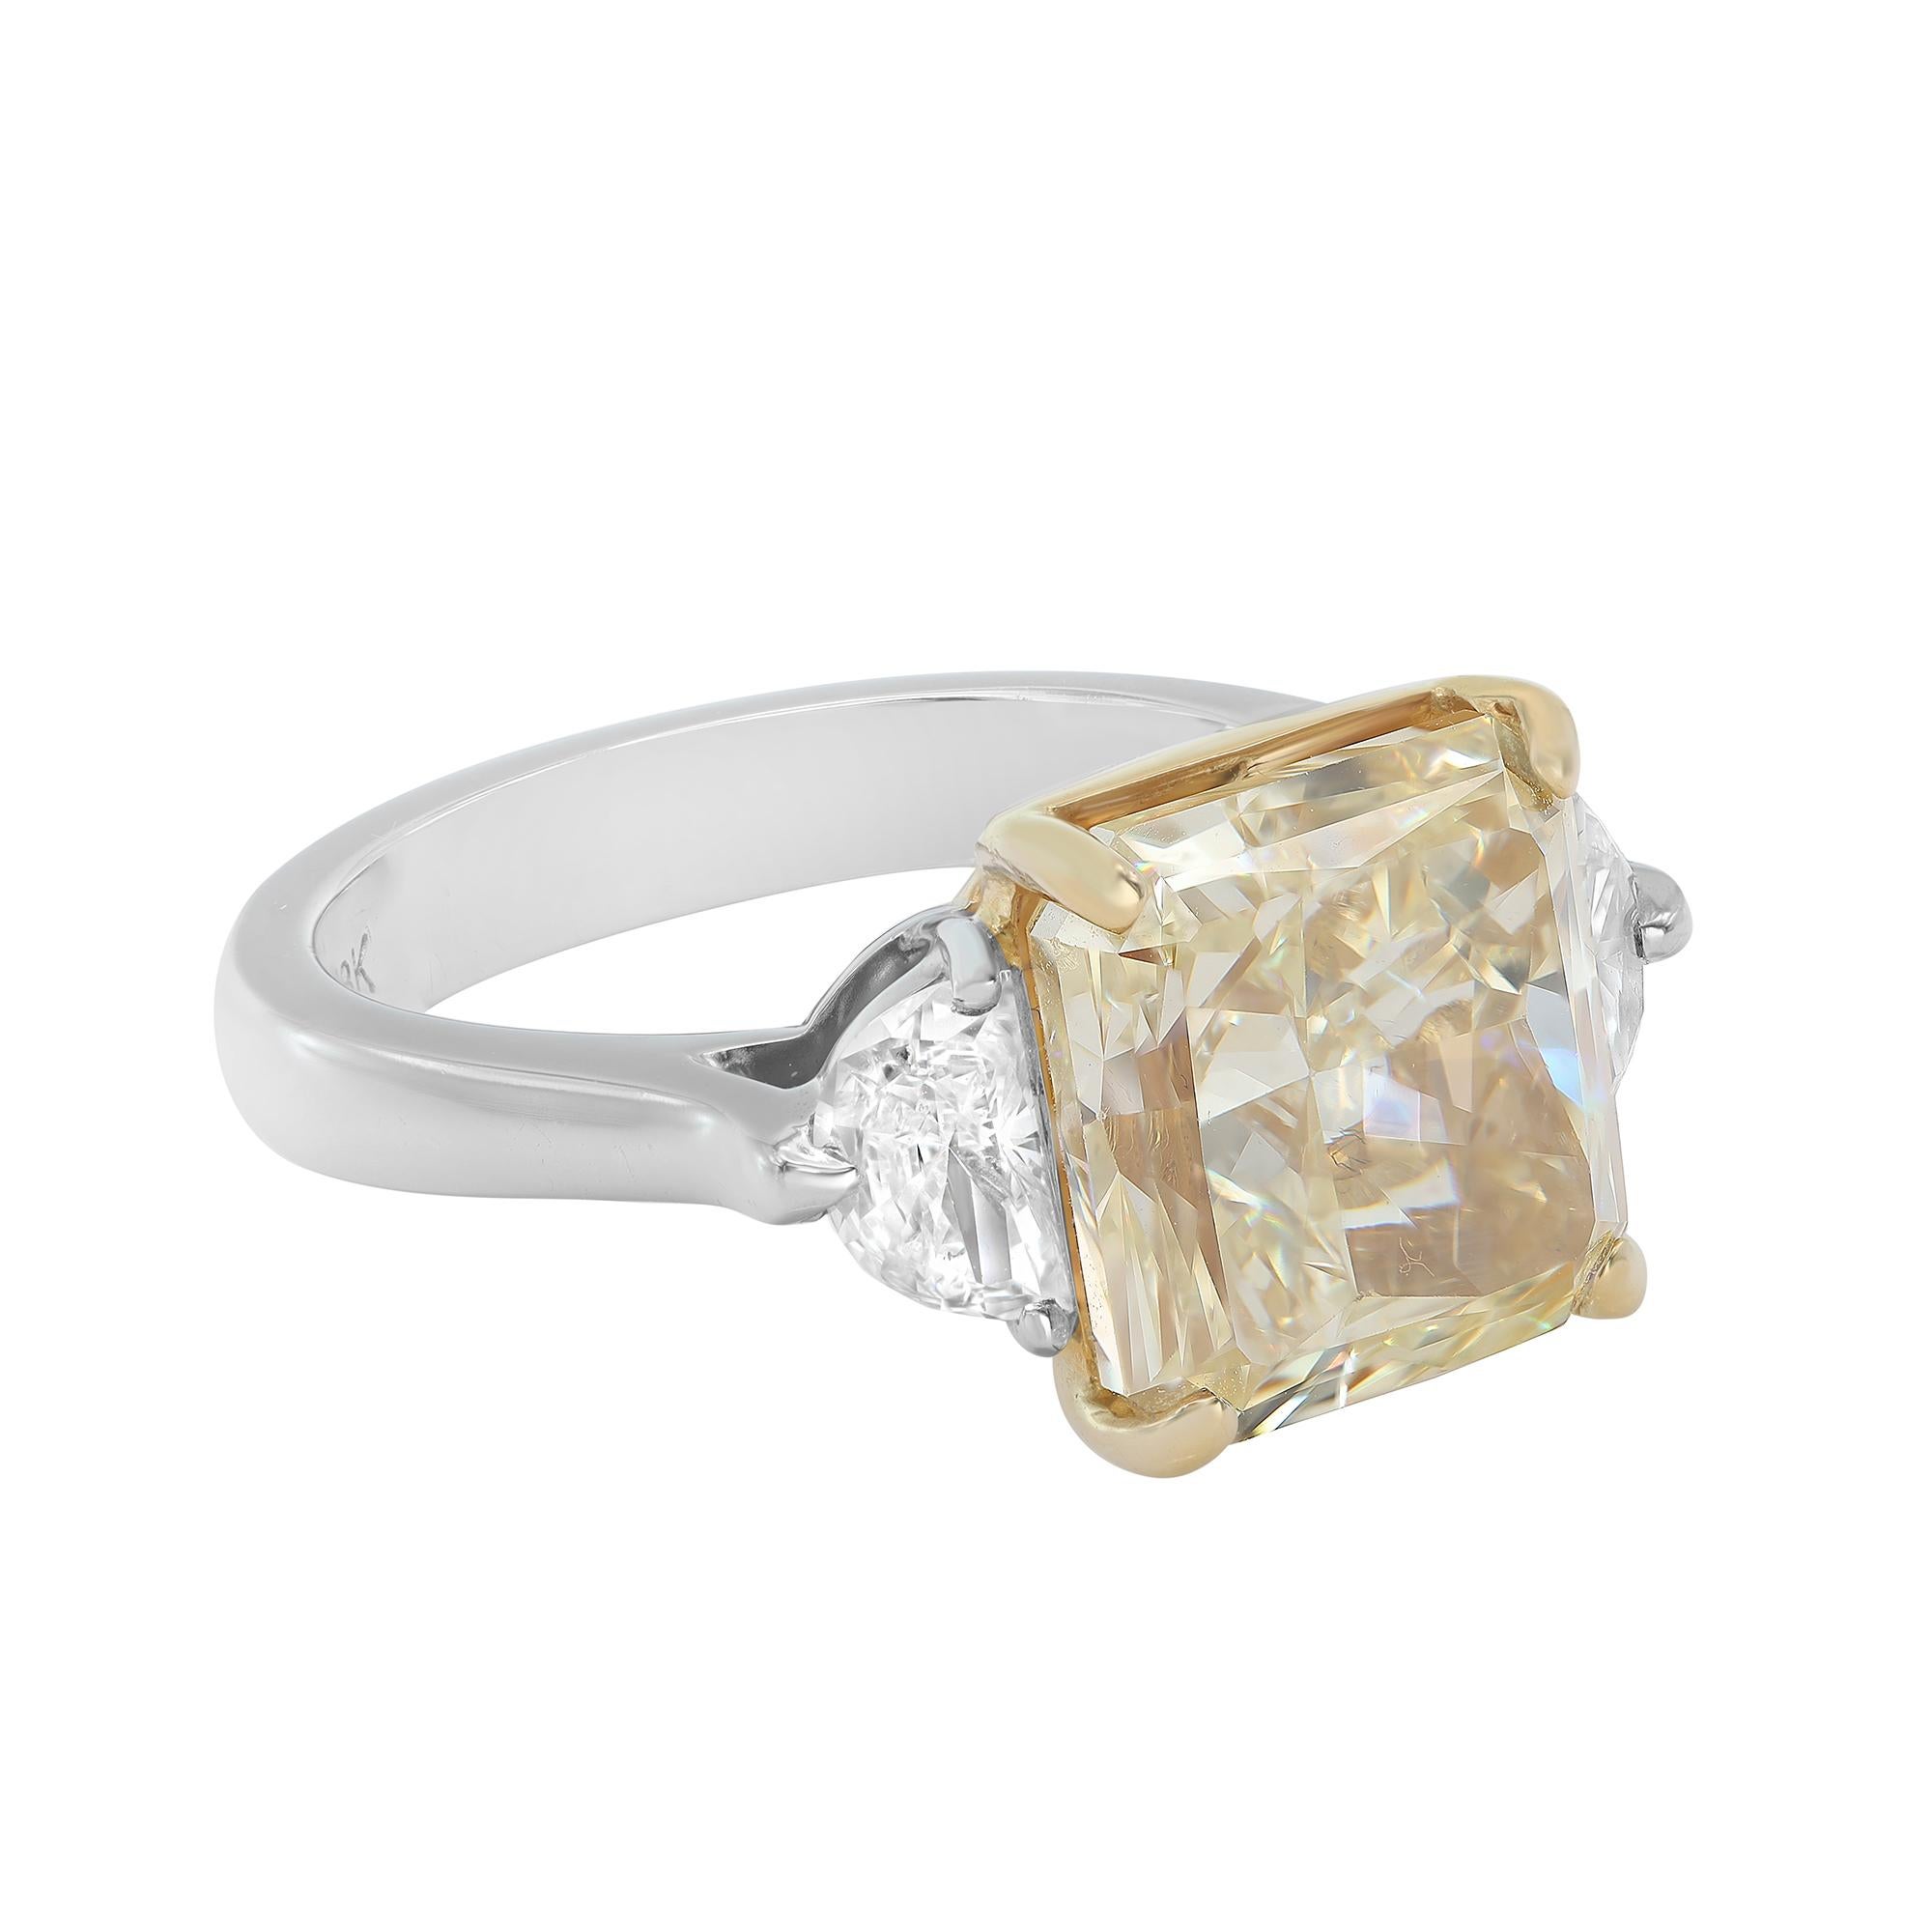 Moderne Bague diamant jaune clair taille princesse Platine Or jaune 18K 5,36cts en vente